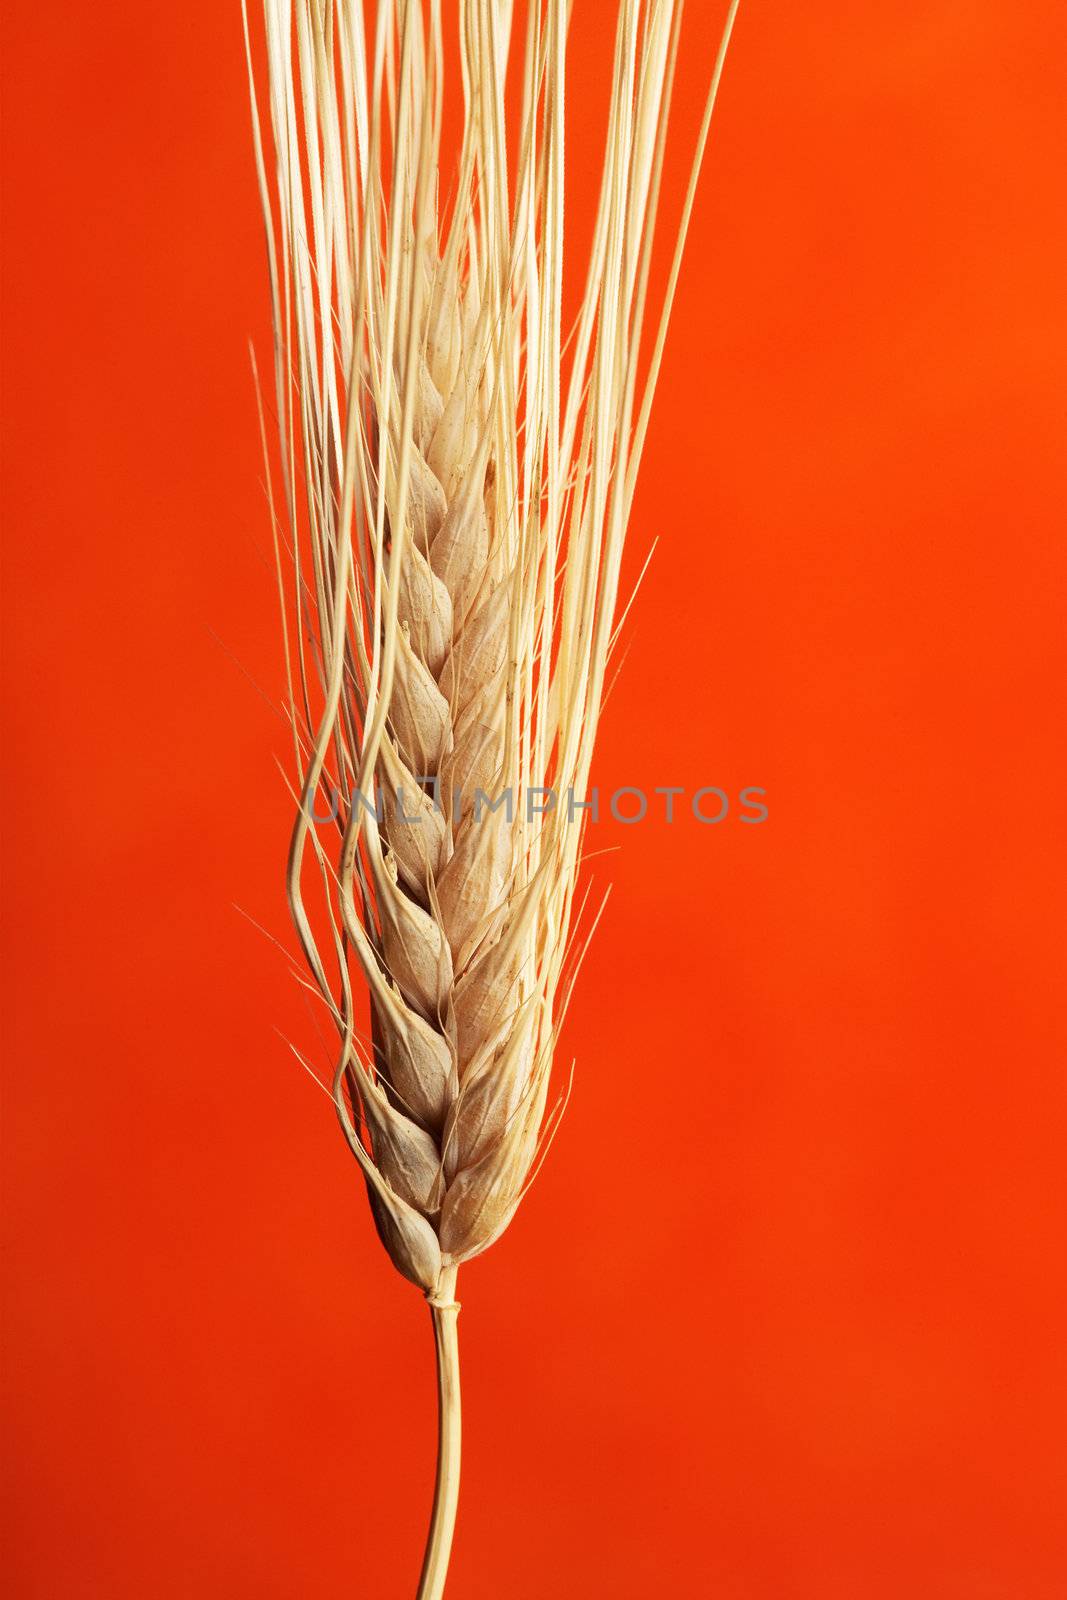 Ripe barley seedhead on red